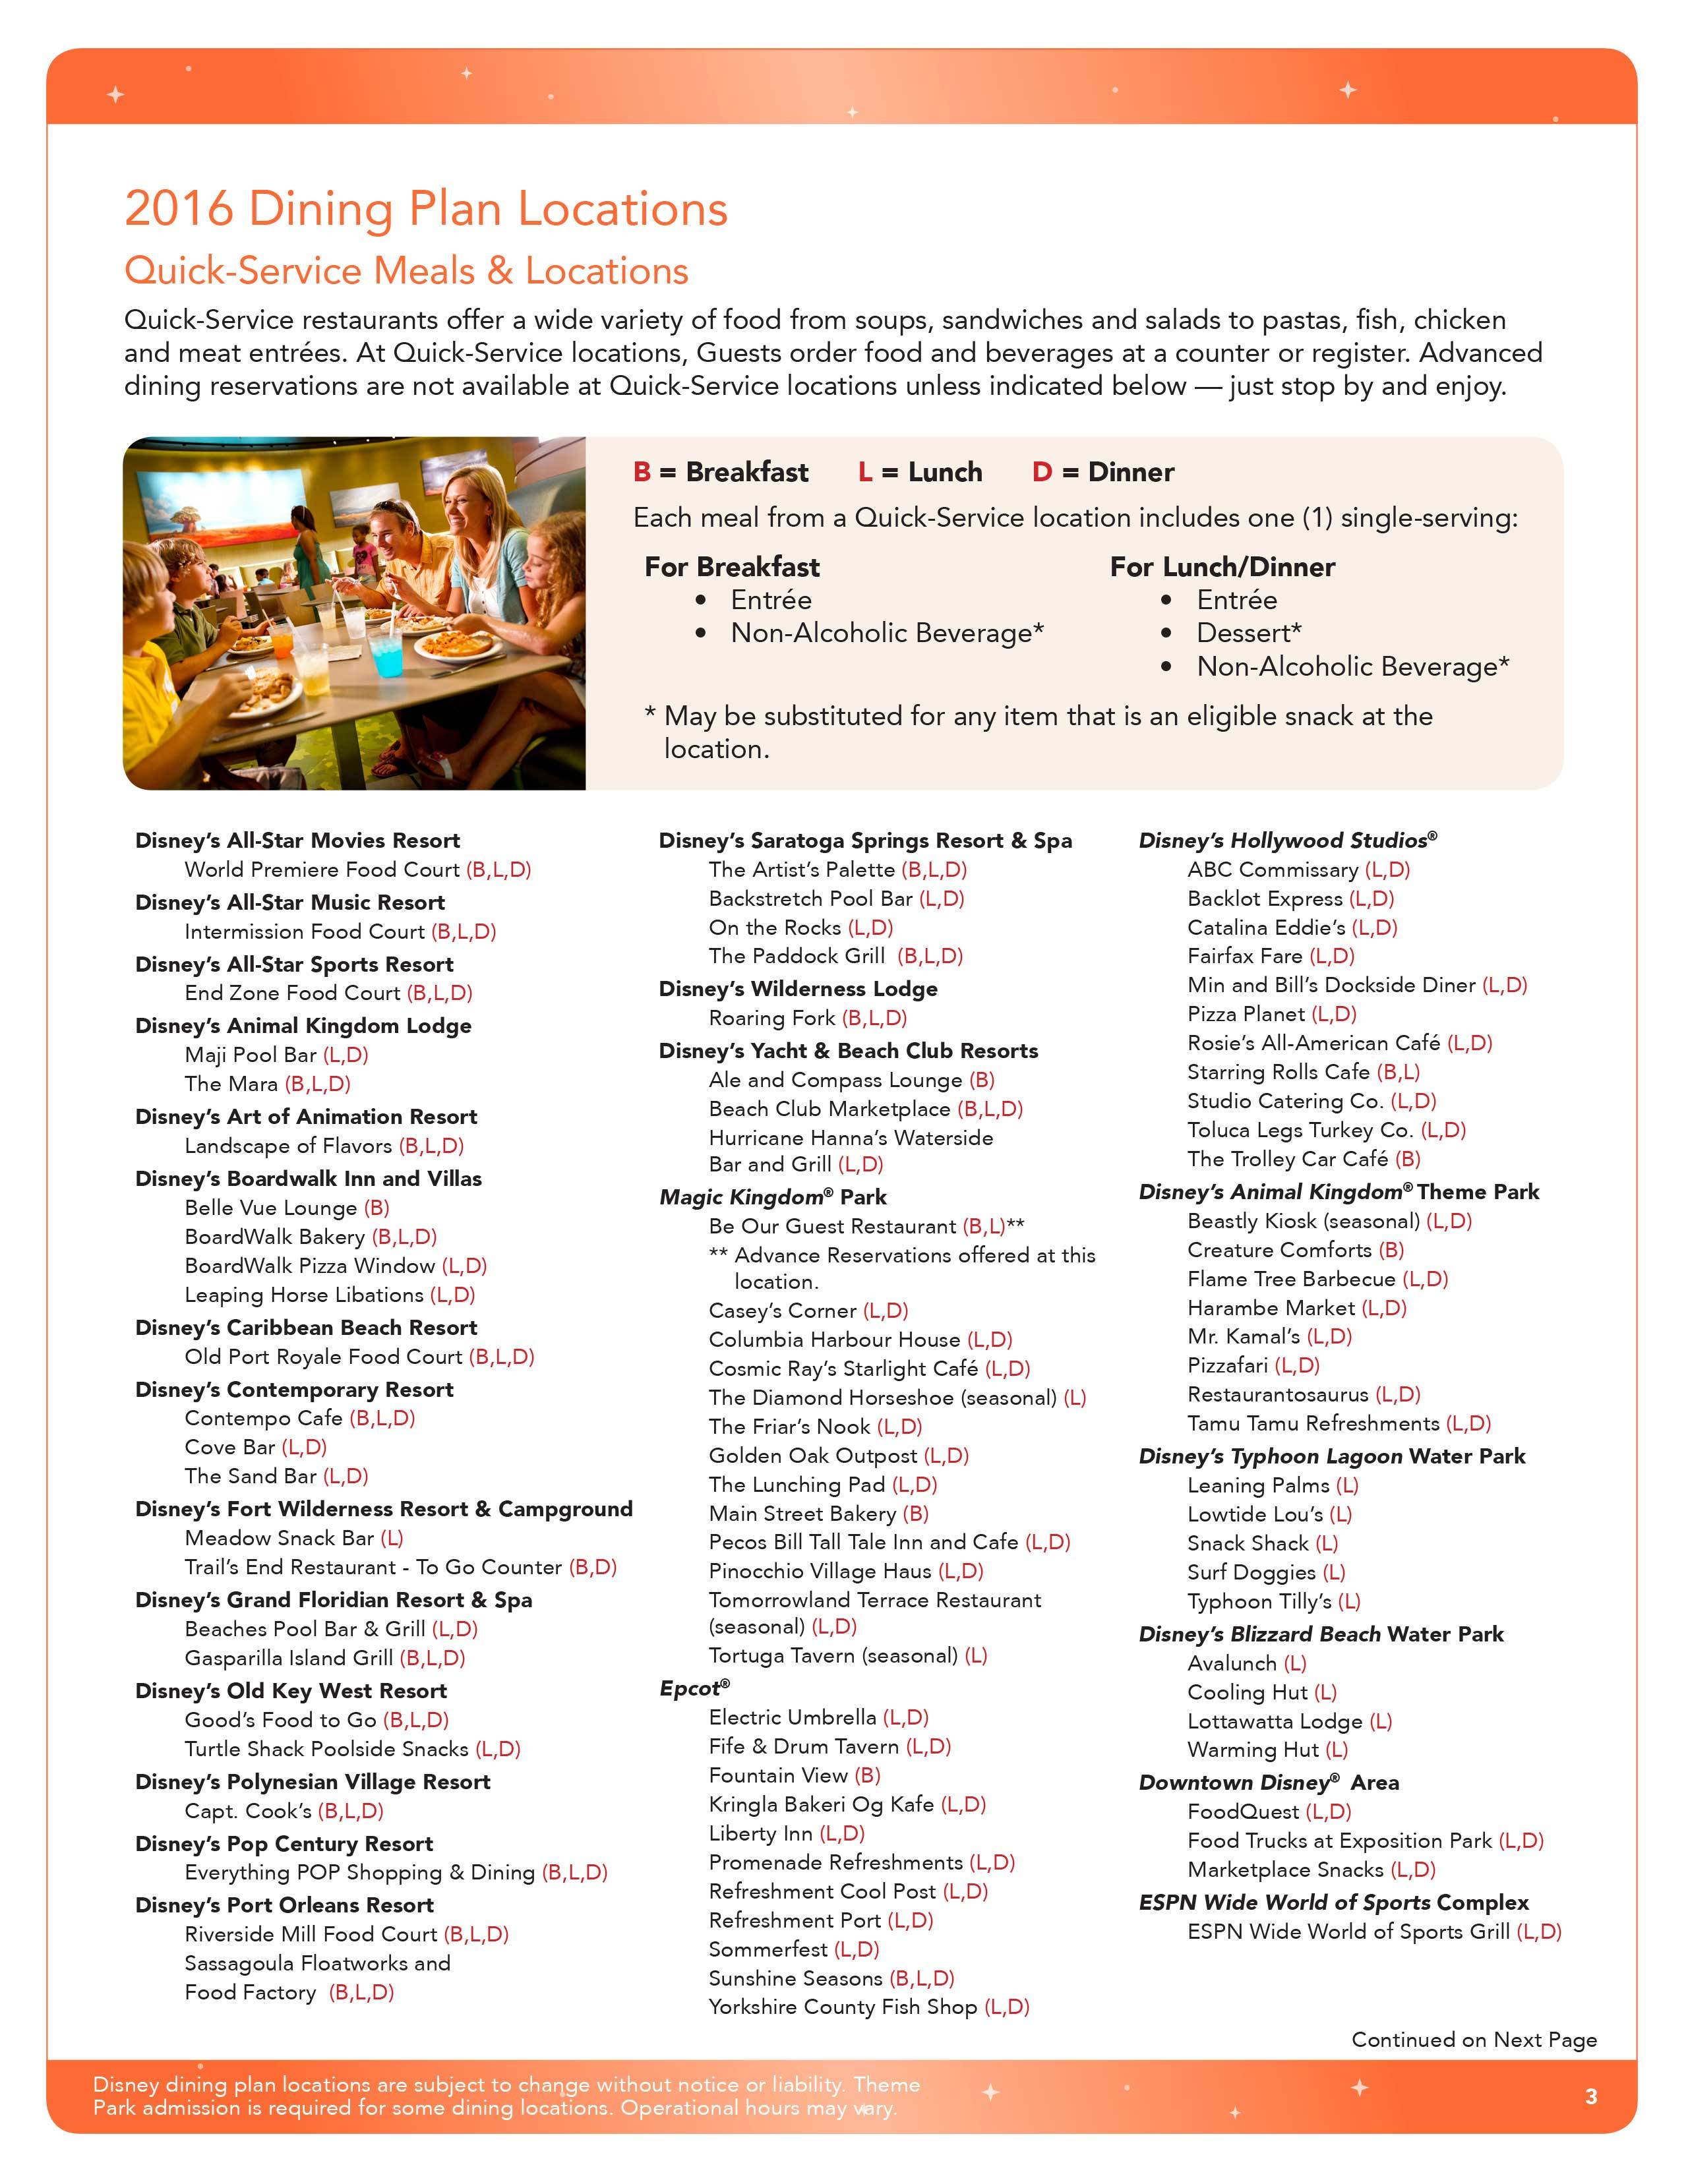 2016 Disney Dining Plan brochures